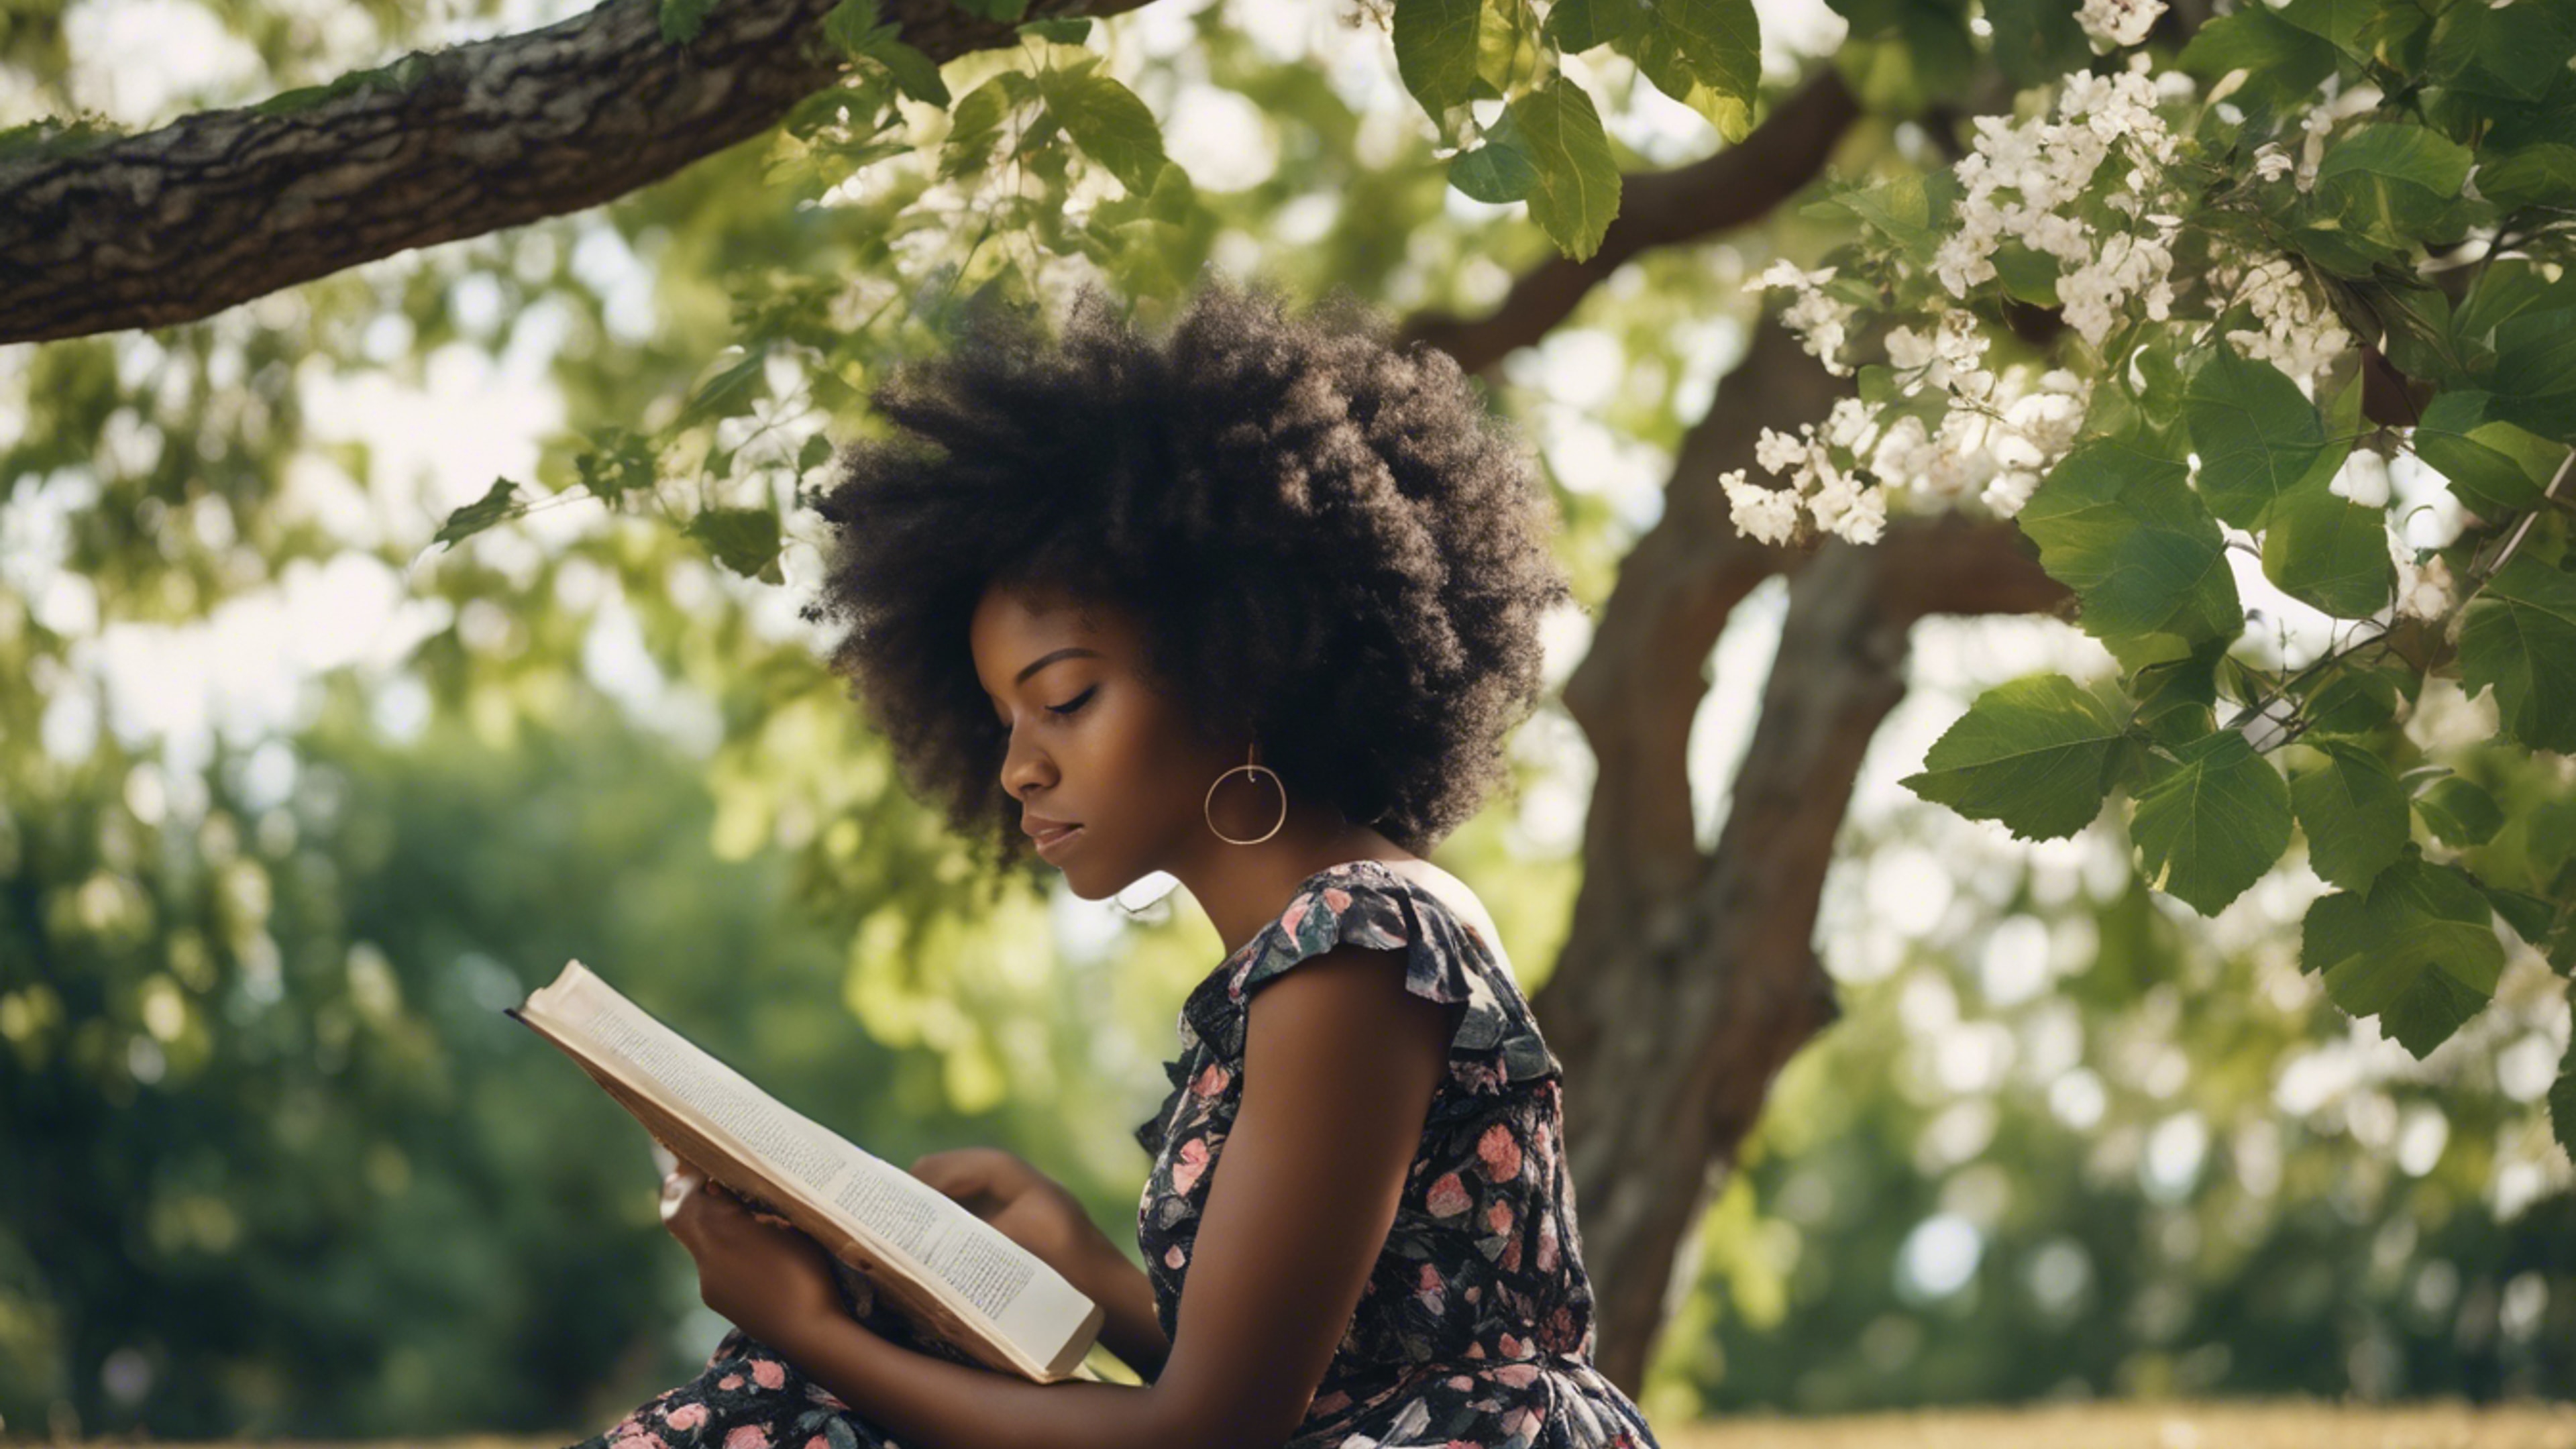 A black girl wearing a floral summer dress, reading a book under a leafy tree. Tapeta[43e6f52508fc47b3bd35]